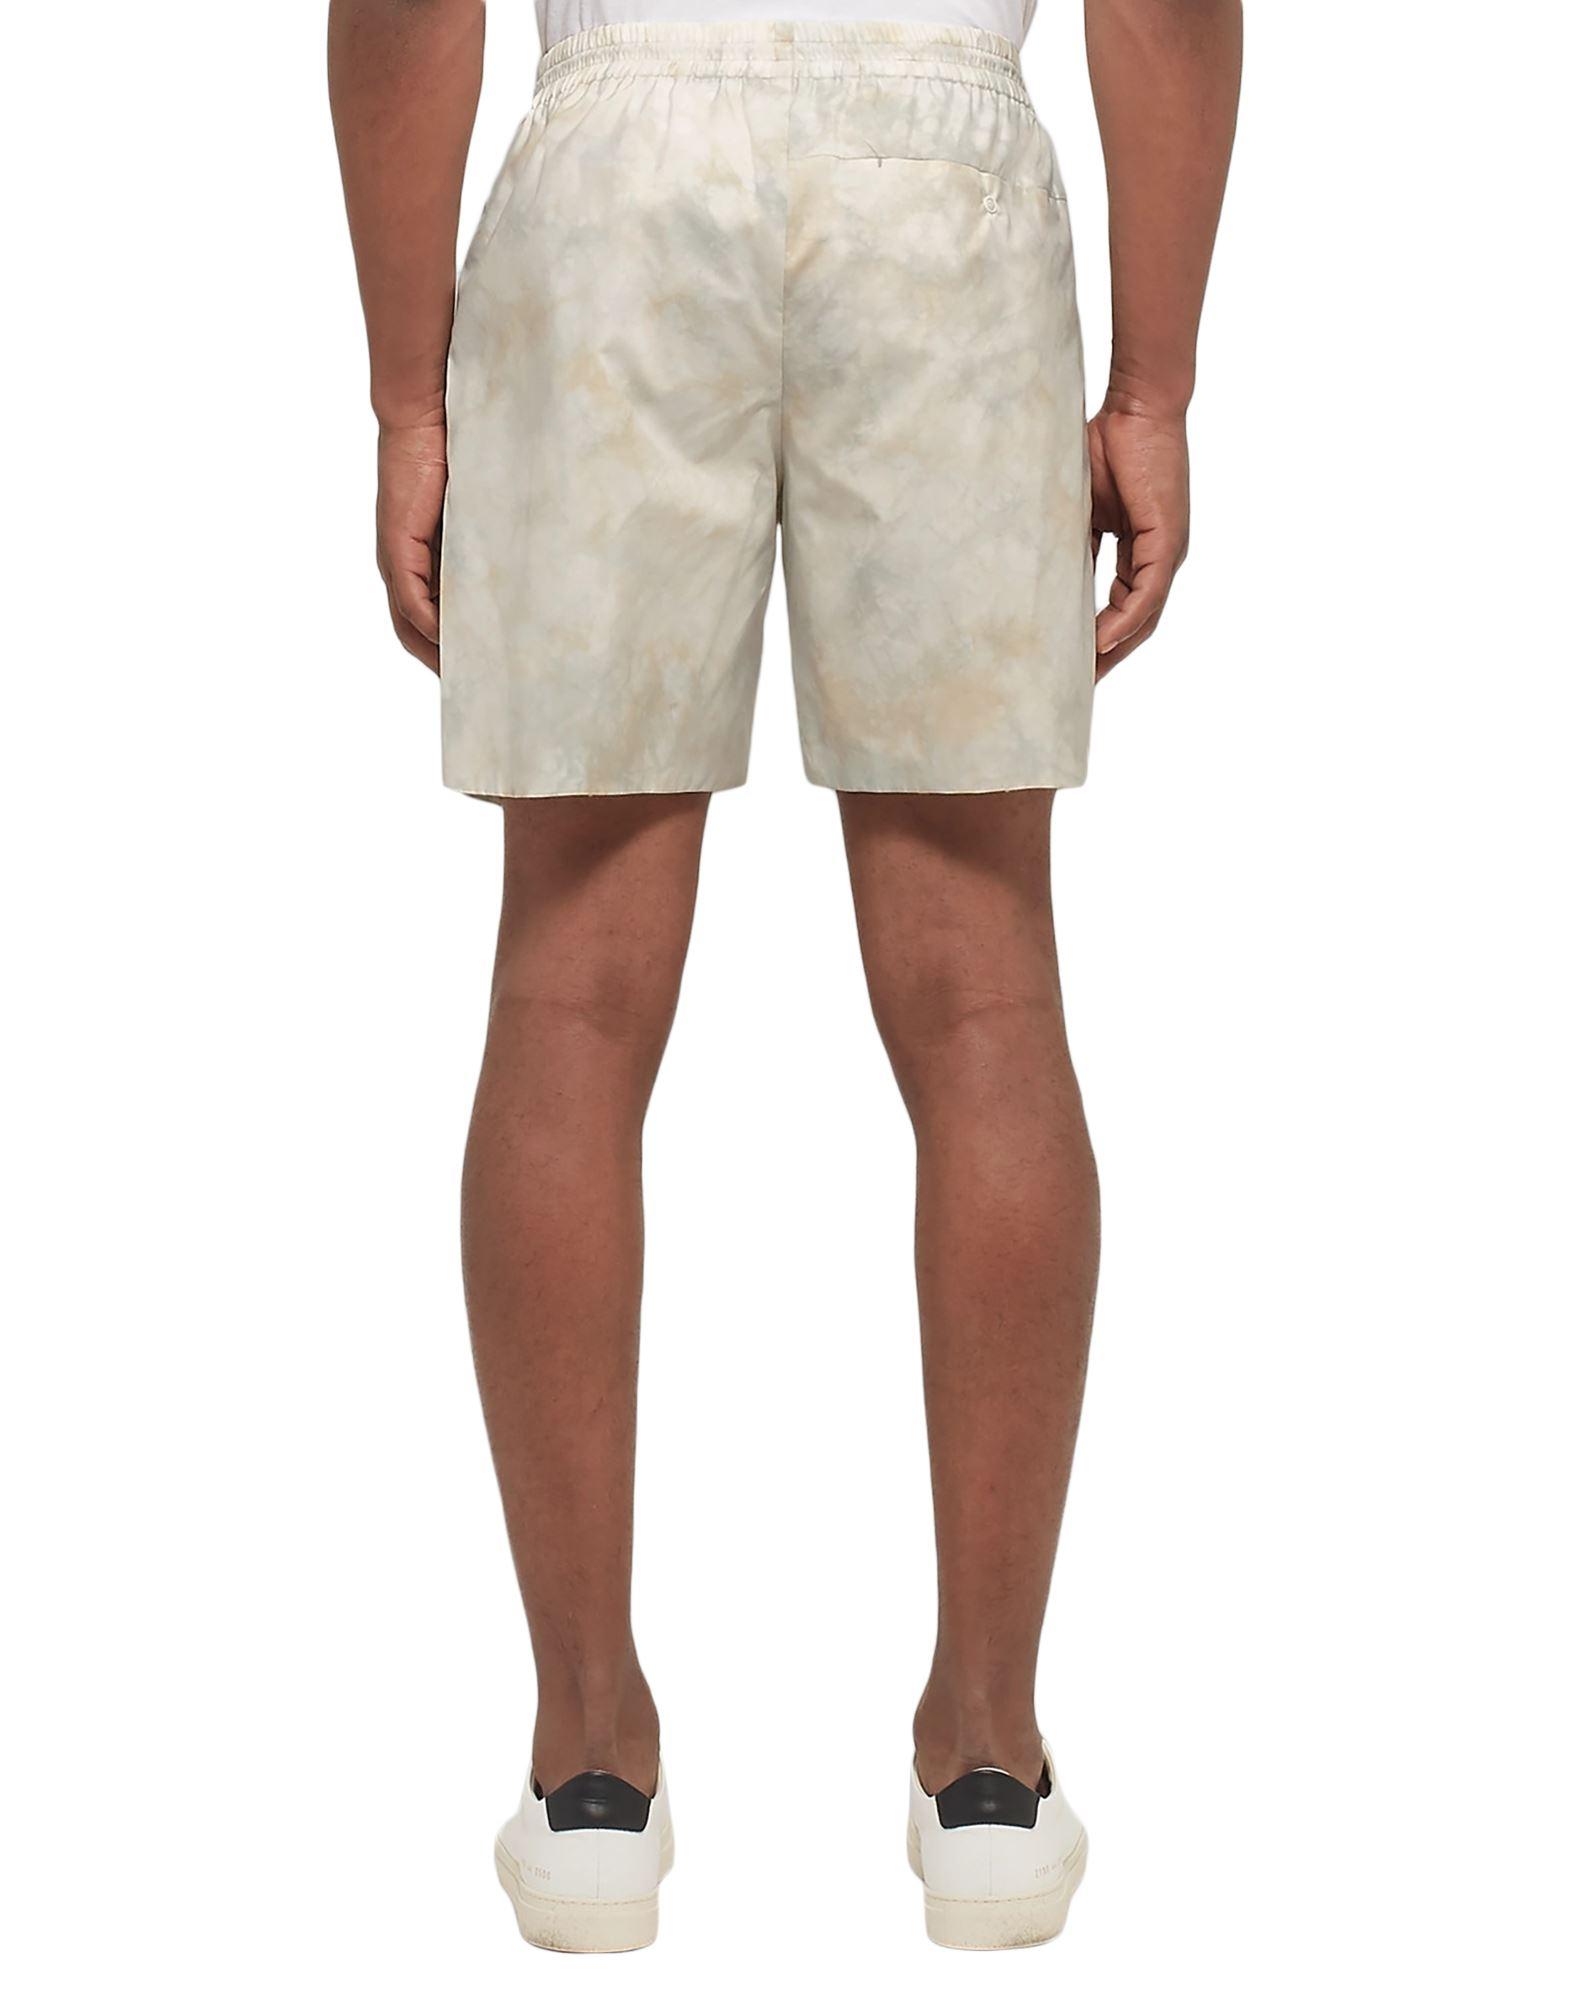 AURALEE Cotton Bermuda Shorts in Ivory (White) for Men - Lyst